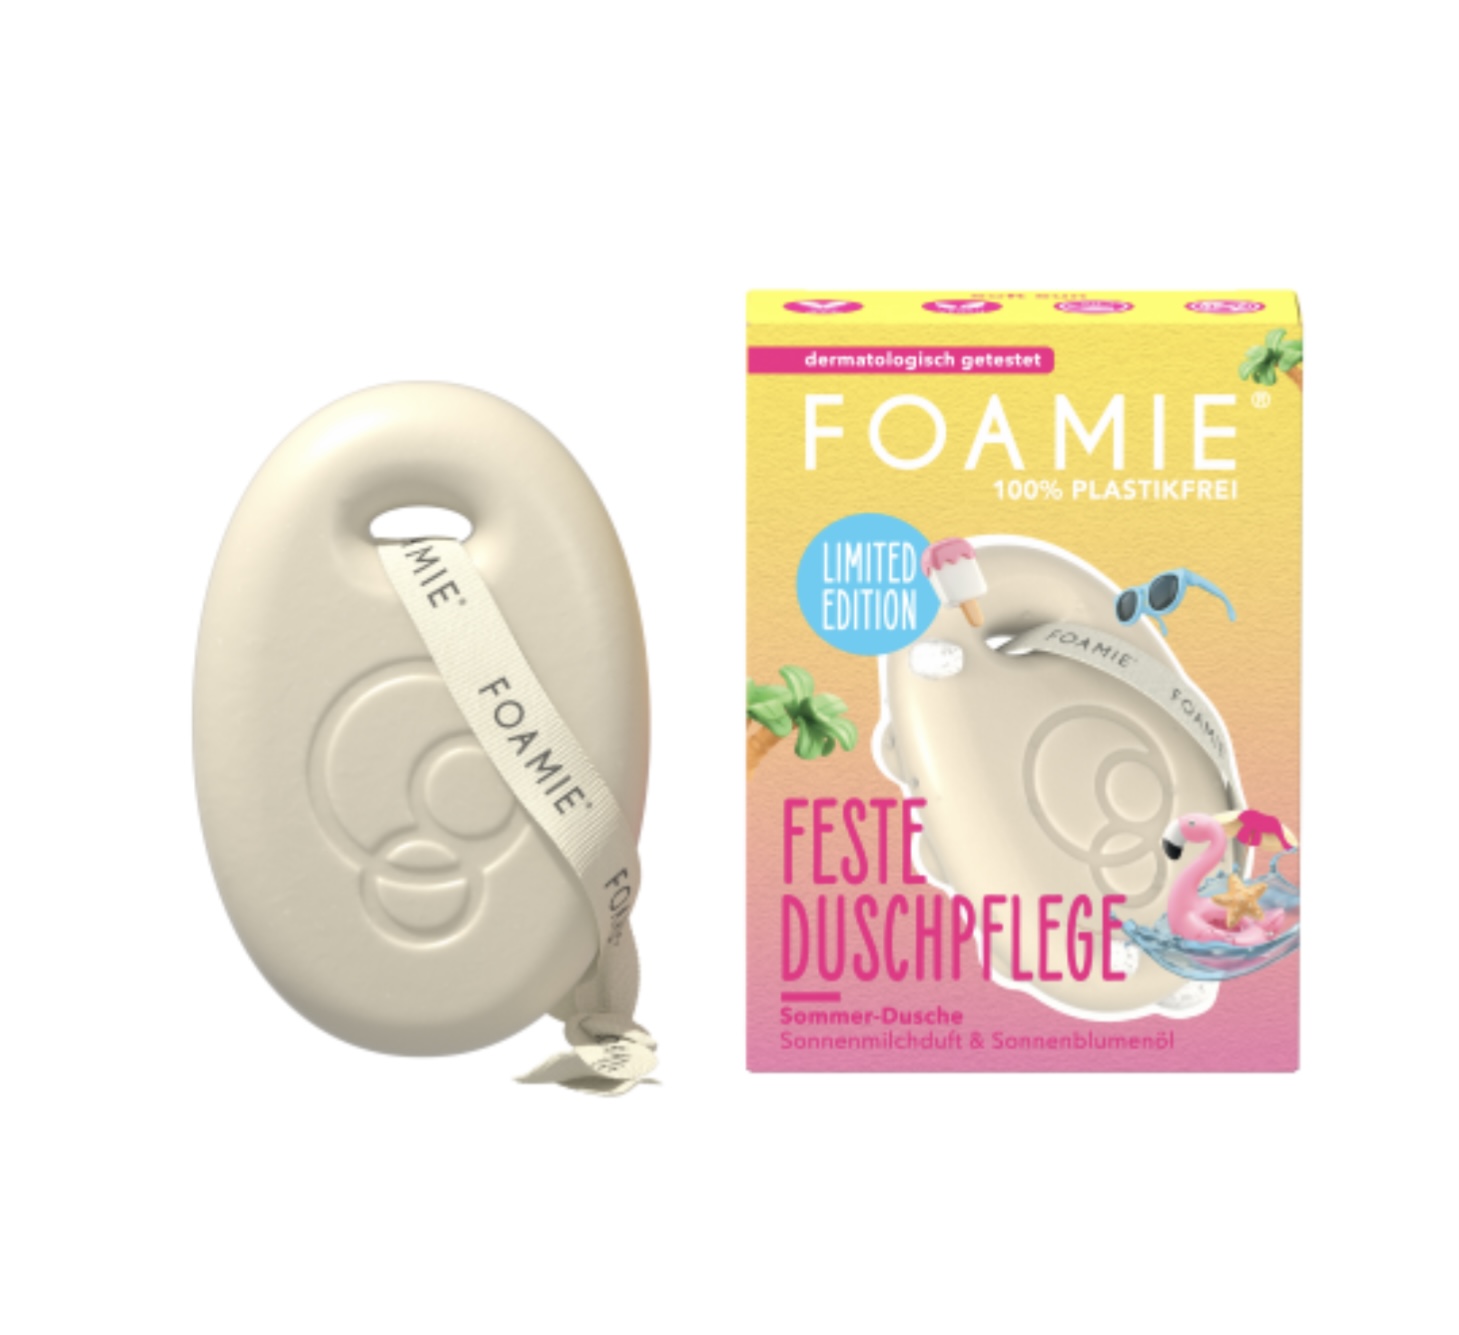 Foamie Feste Duschpflege Soft Sun Limited Edition